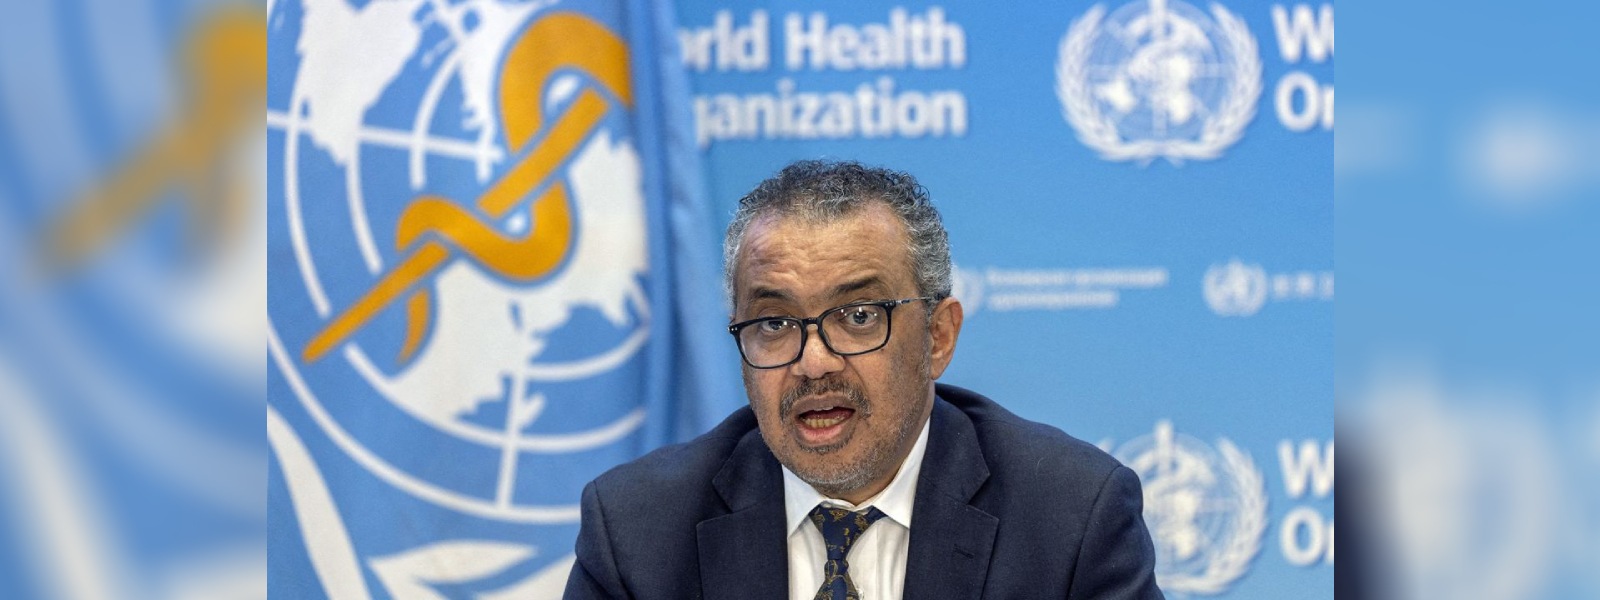 "Covid-19 no longer global health emergency" - WHO